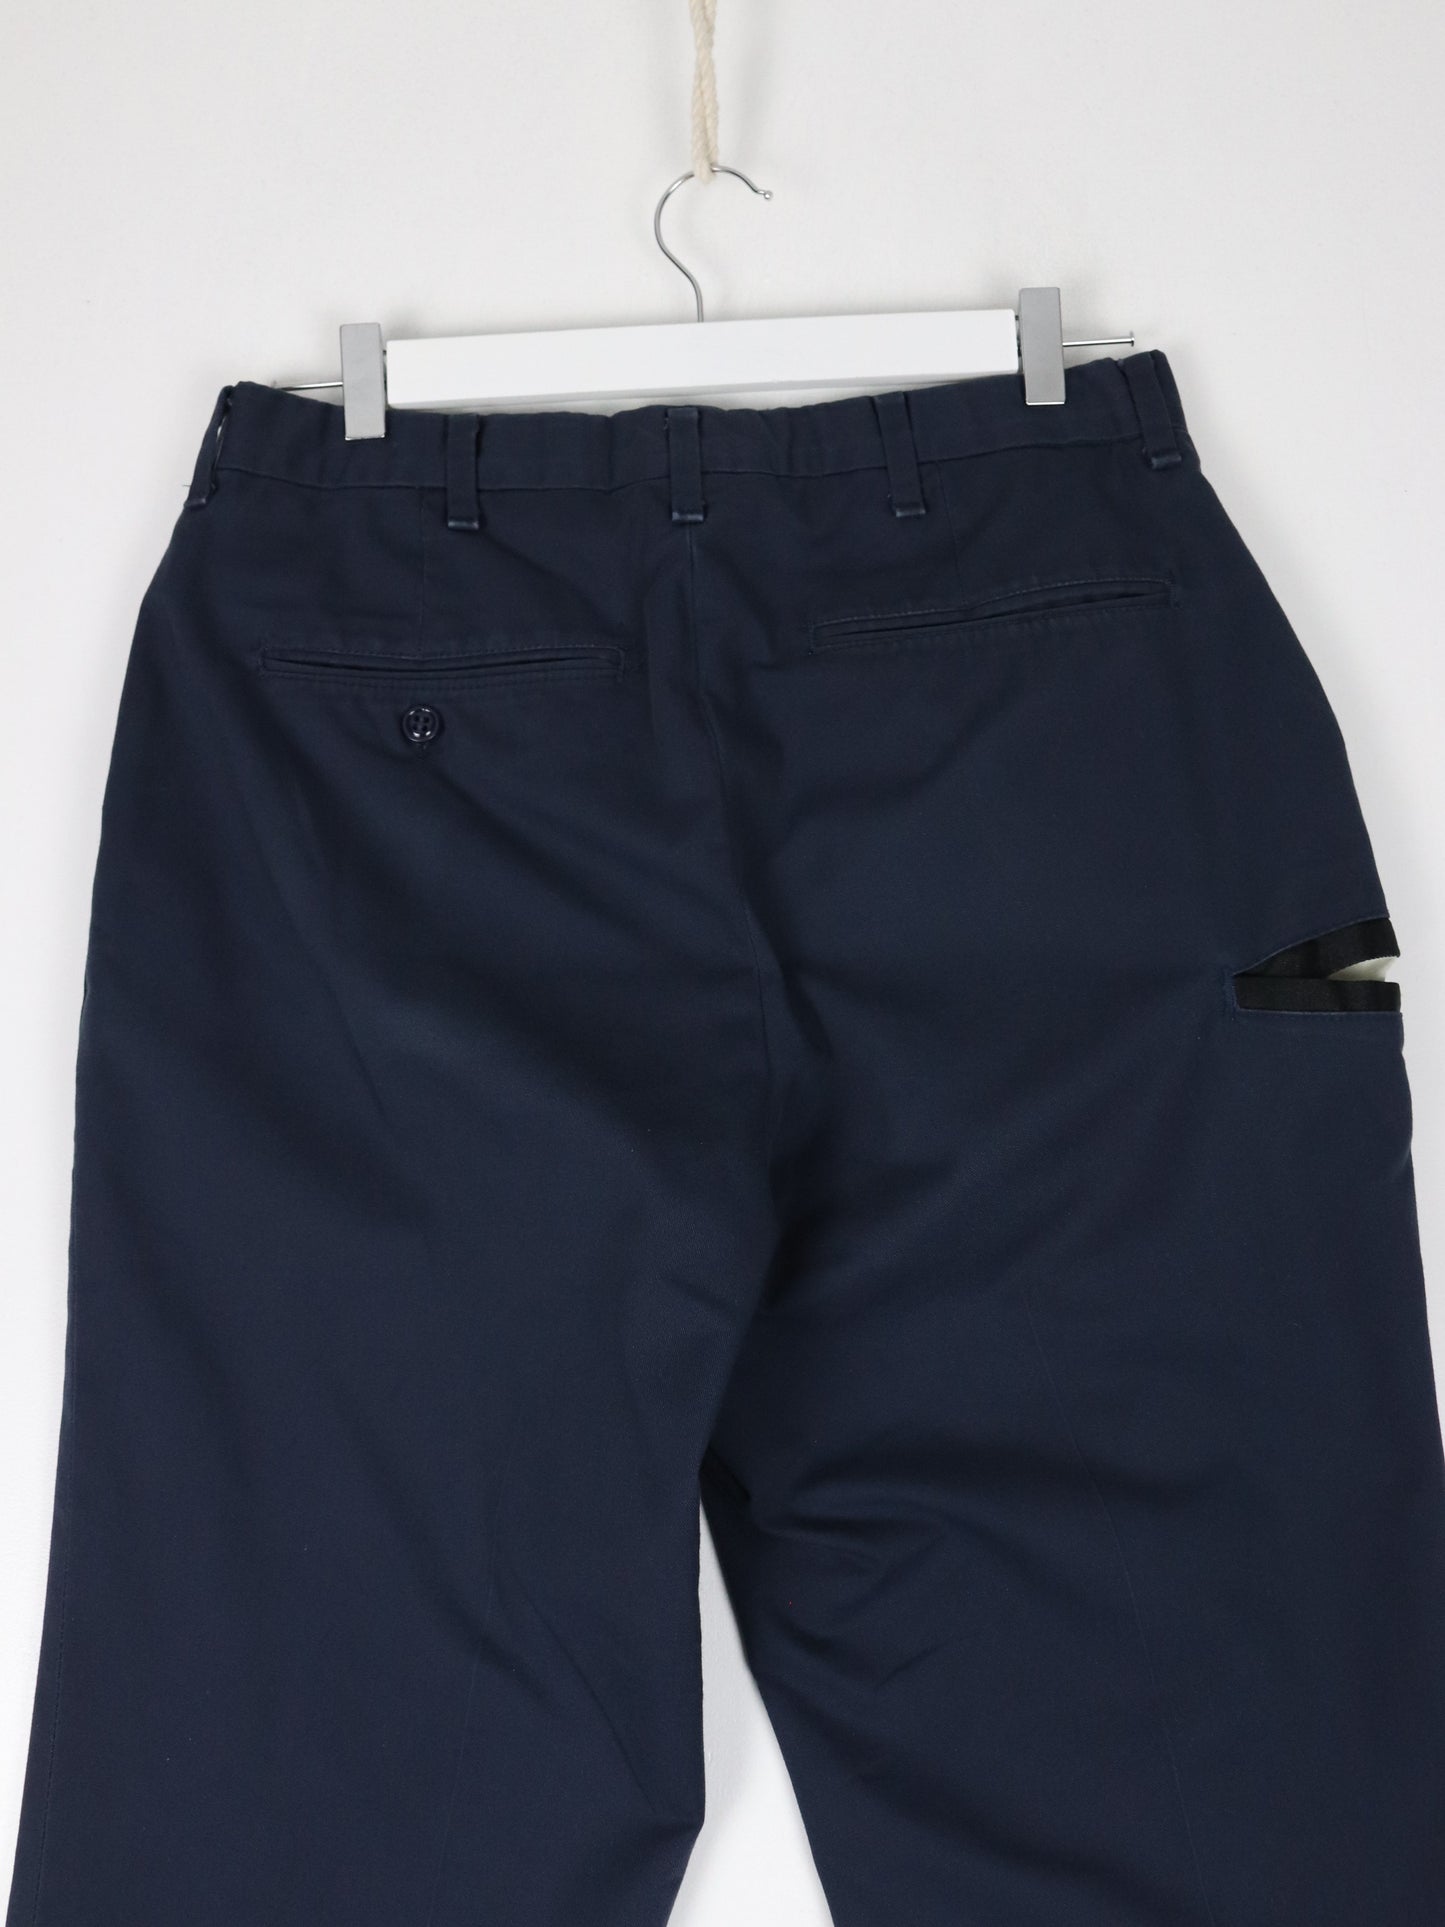 Riverside Pants Fits Mens 31 x 28 Blue Chino Uniform